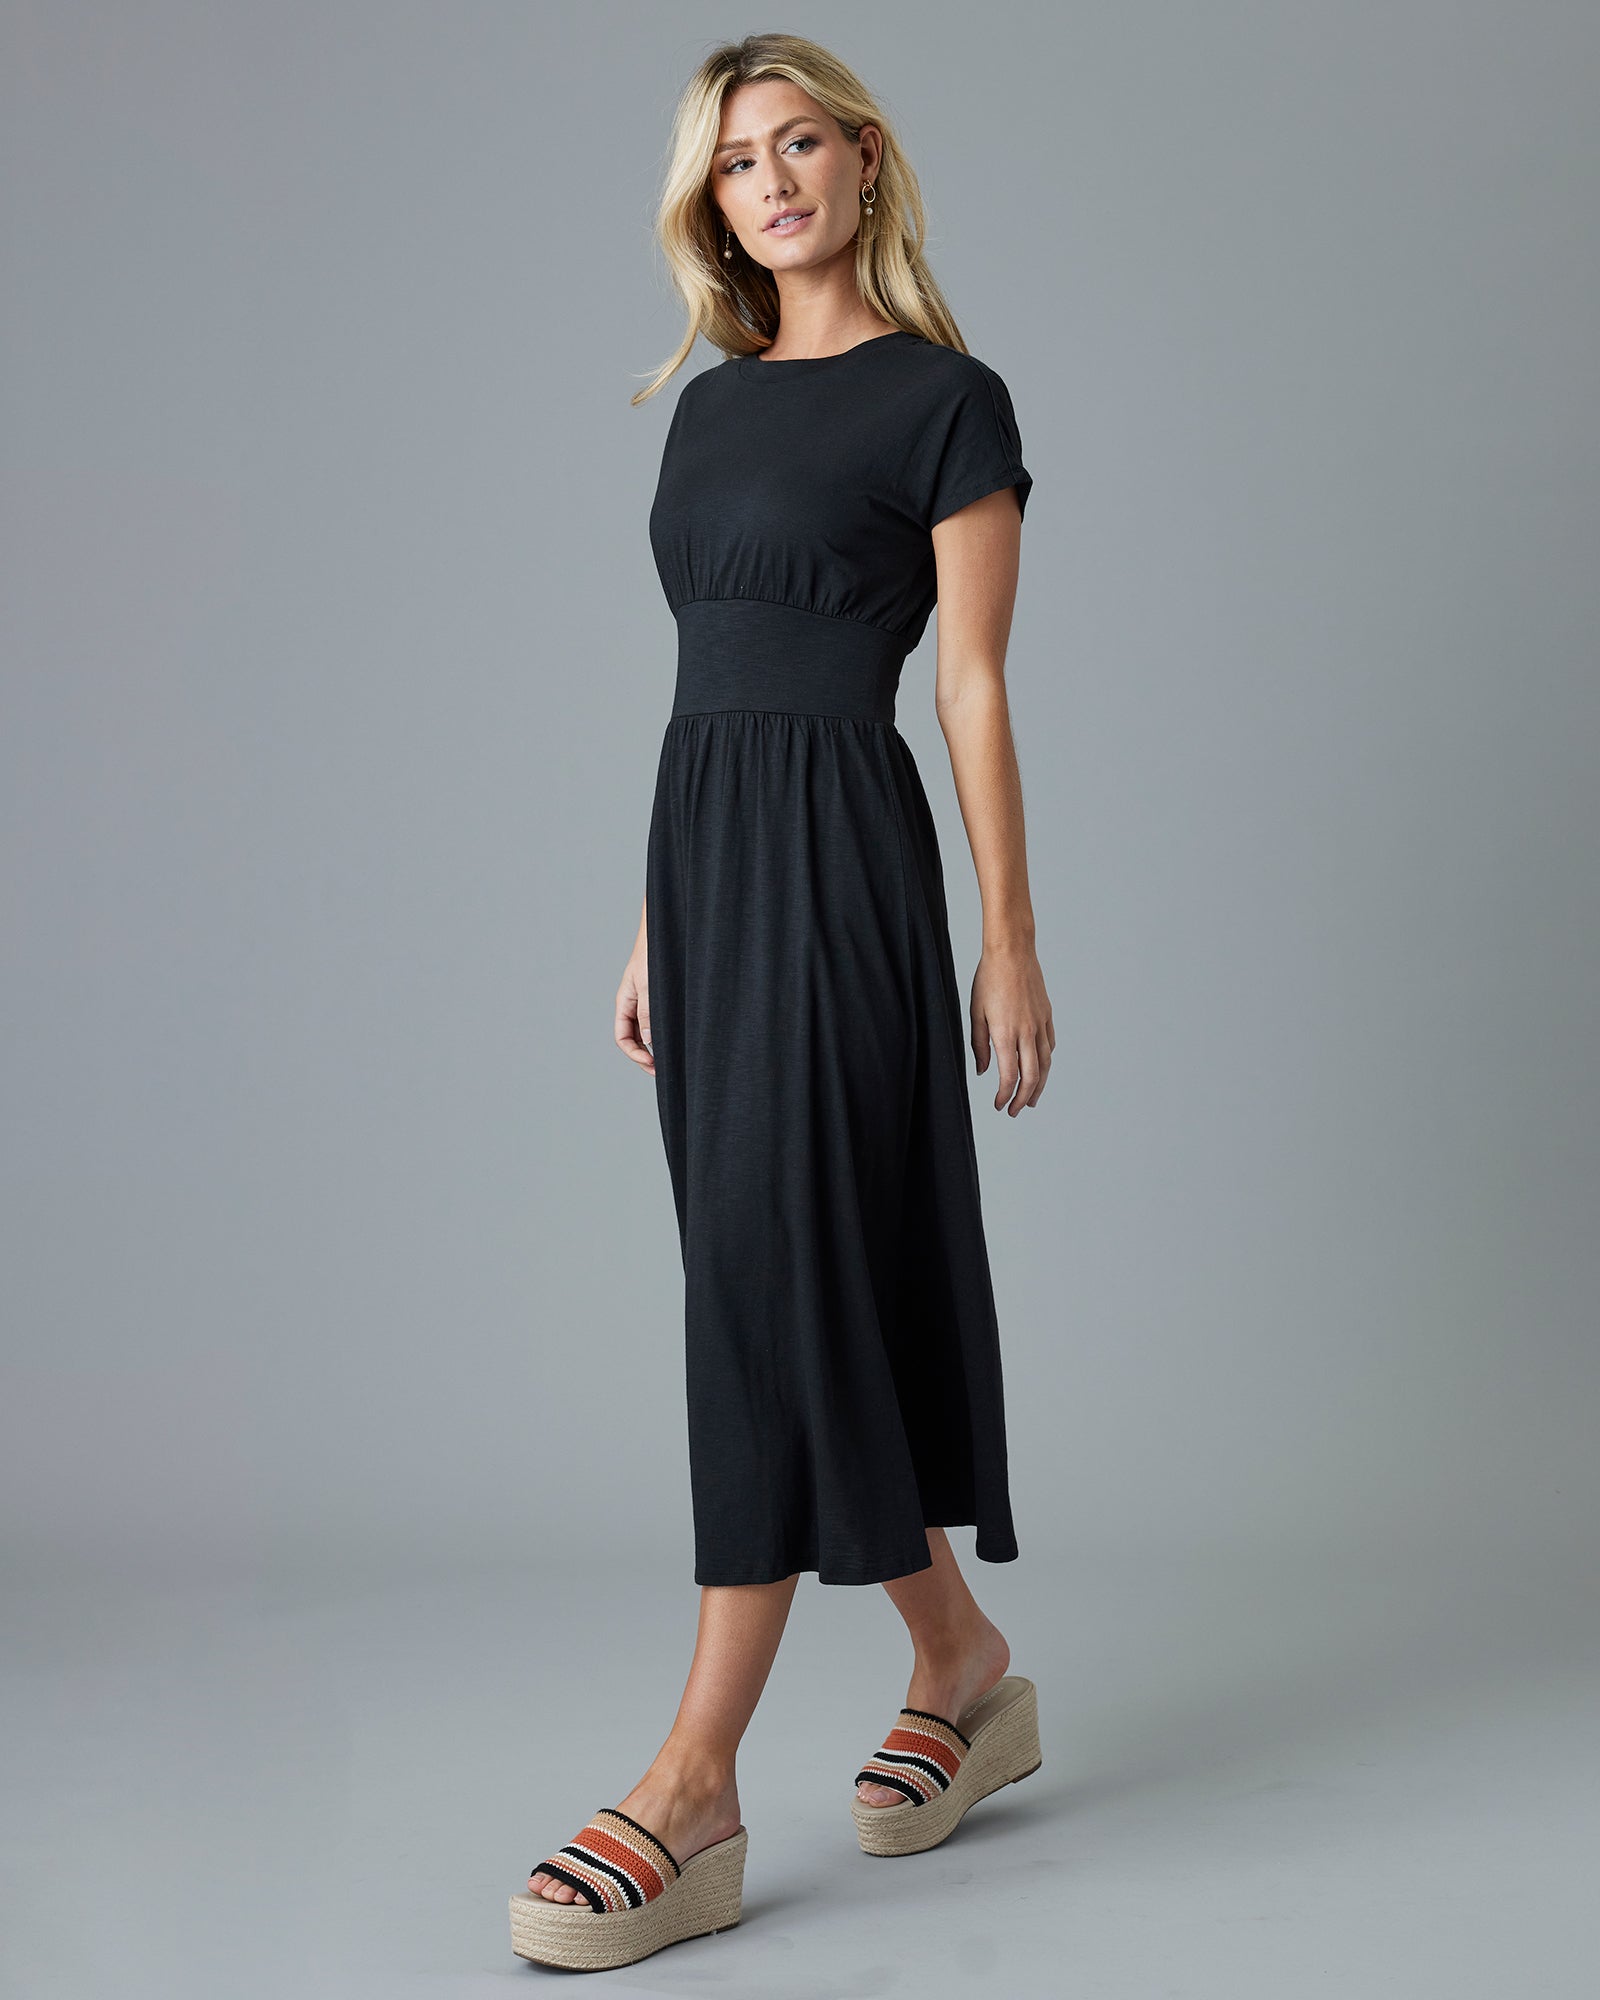 Woman in a black, short sleeve, midi dress